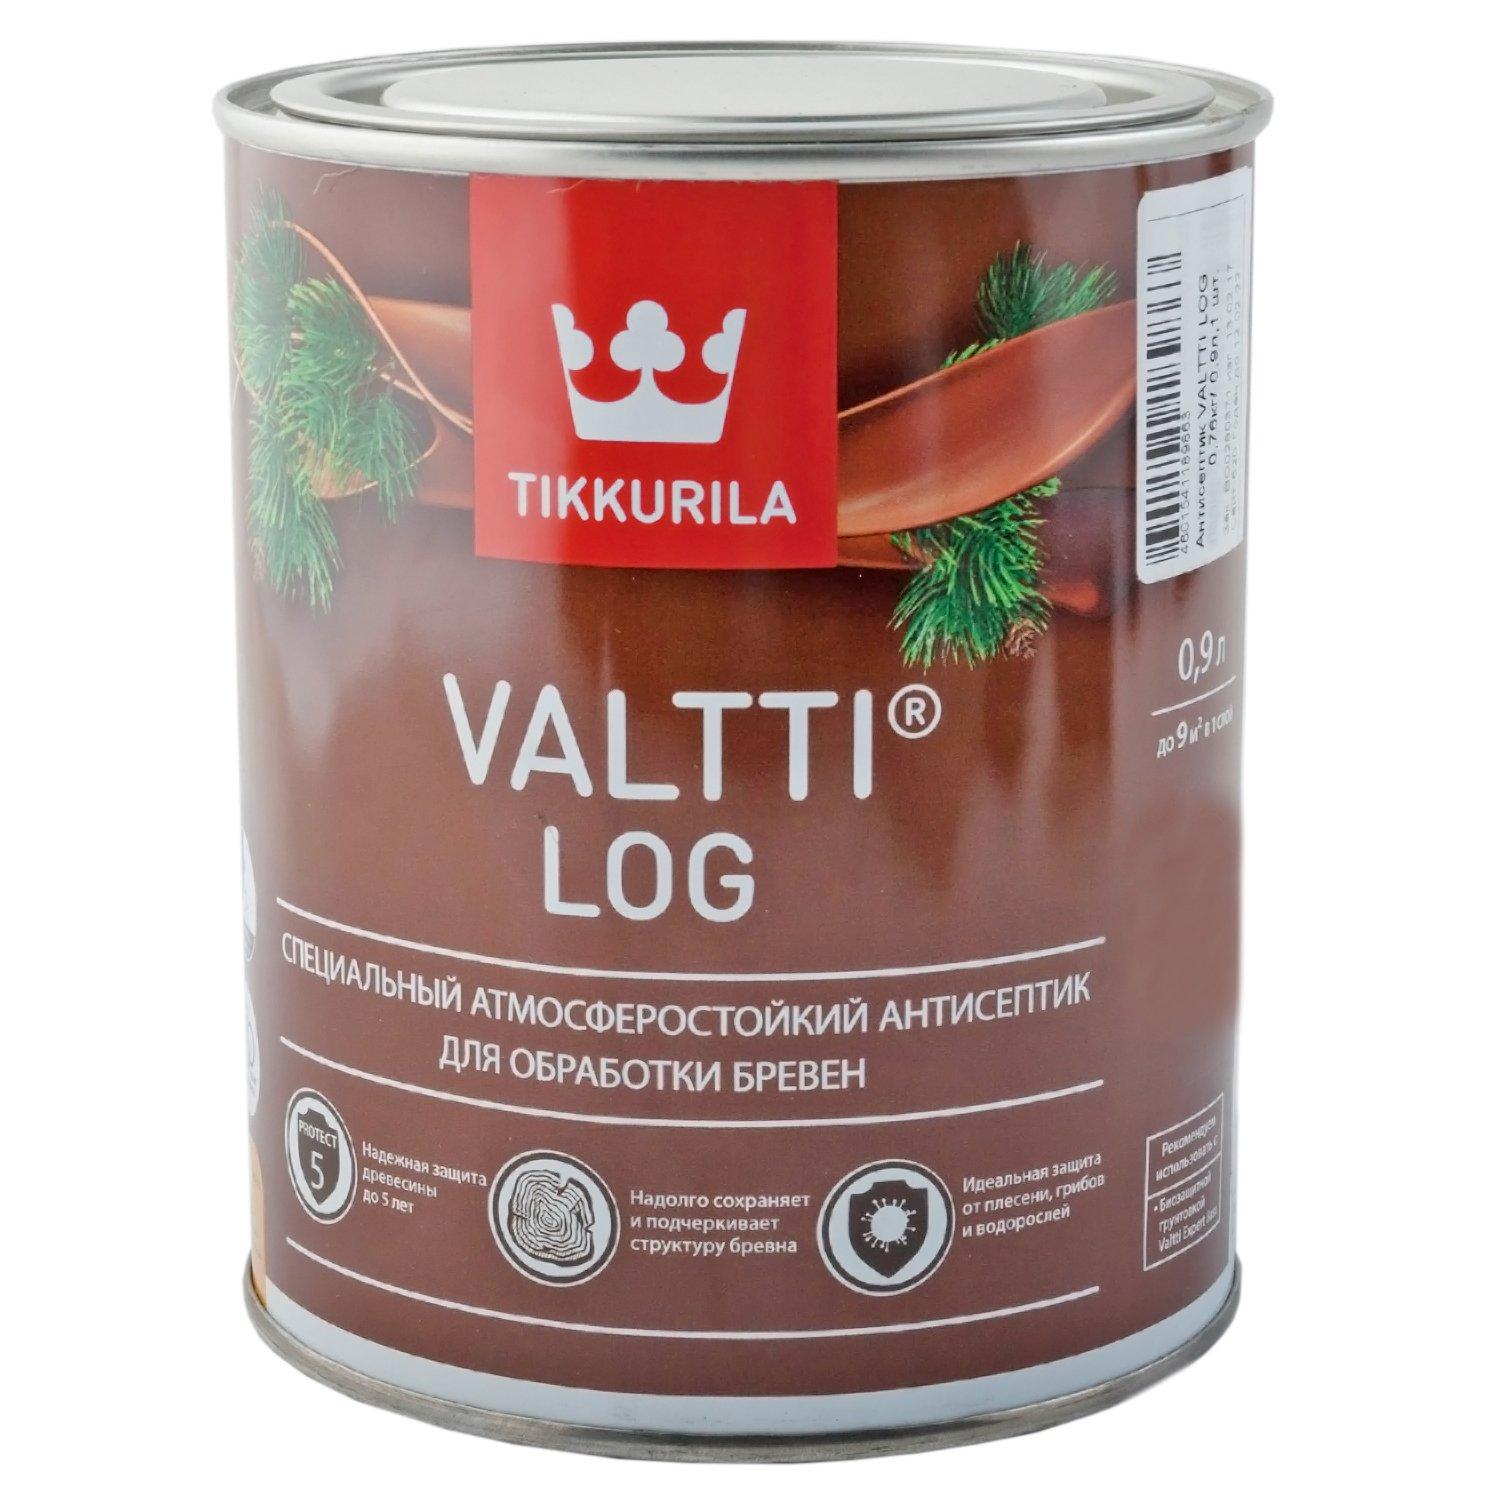 Купить Антисептик Tikkurila Valtti Log EC 0,9 л